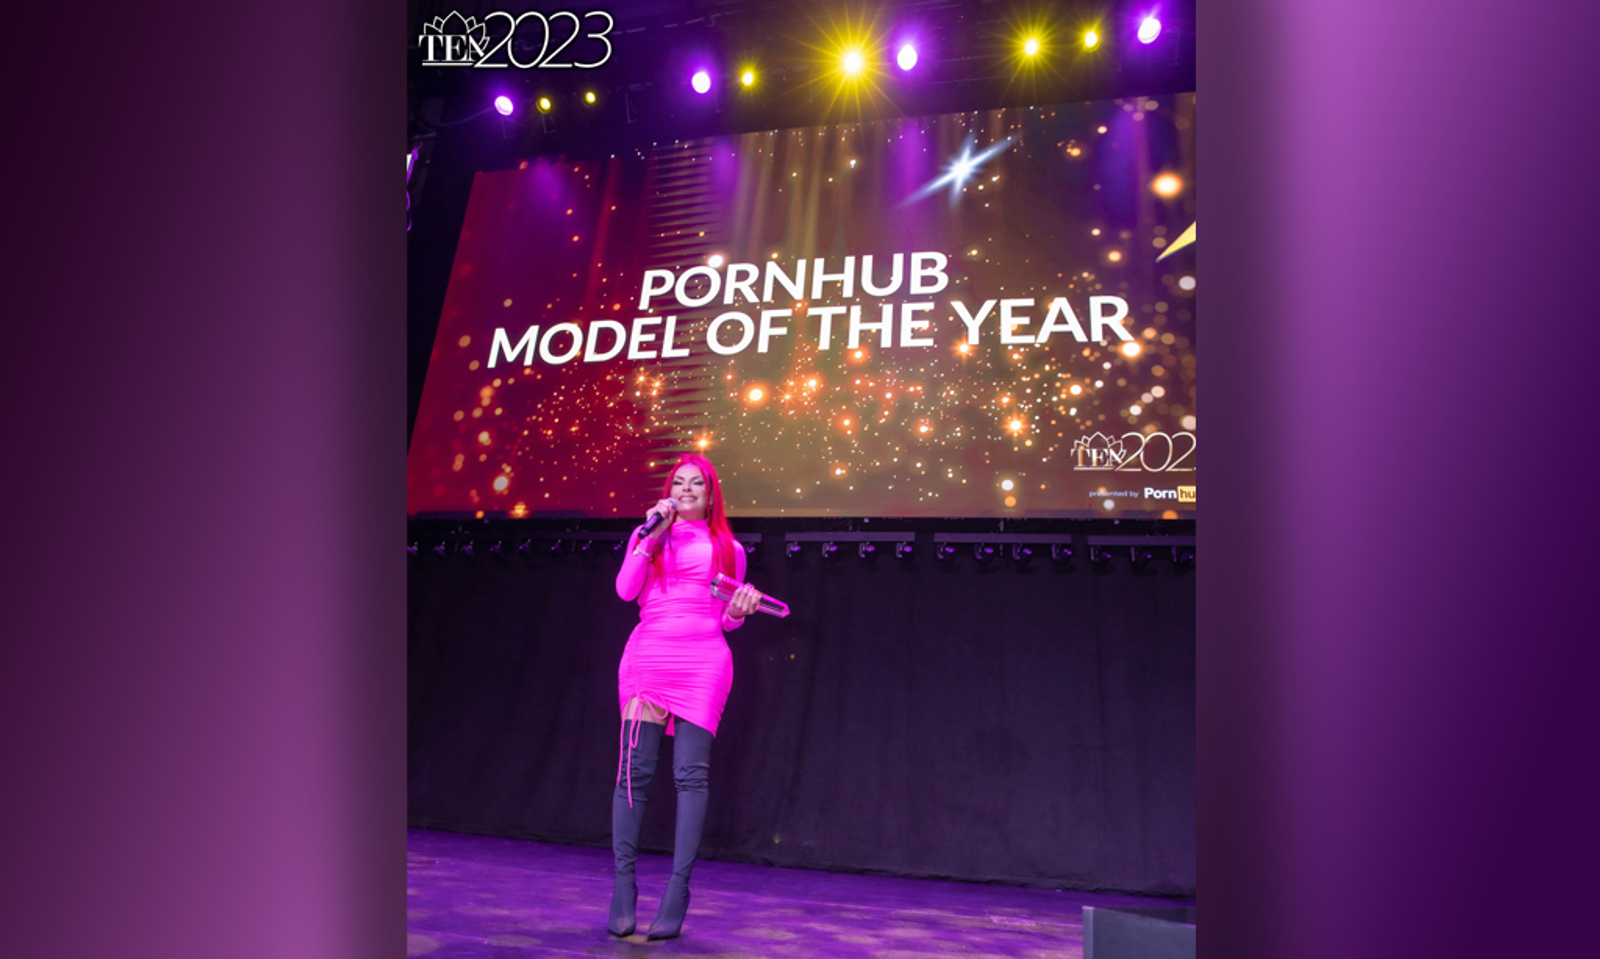 Foxxy Crowned 2023 TEAs Pornhub Model of the Year